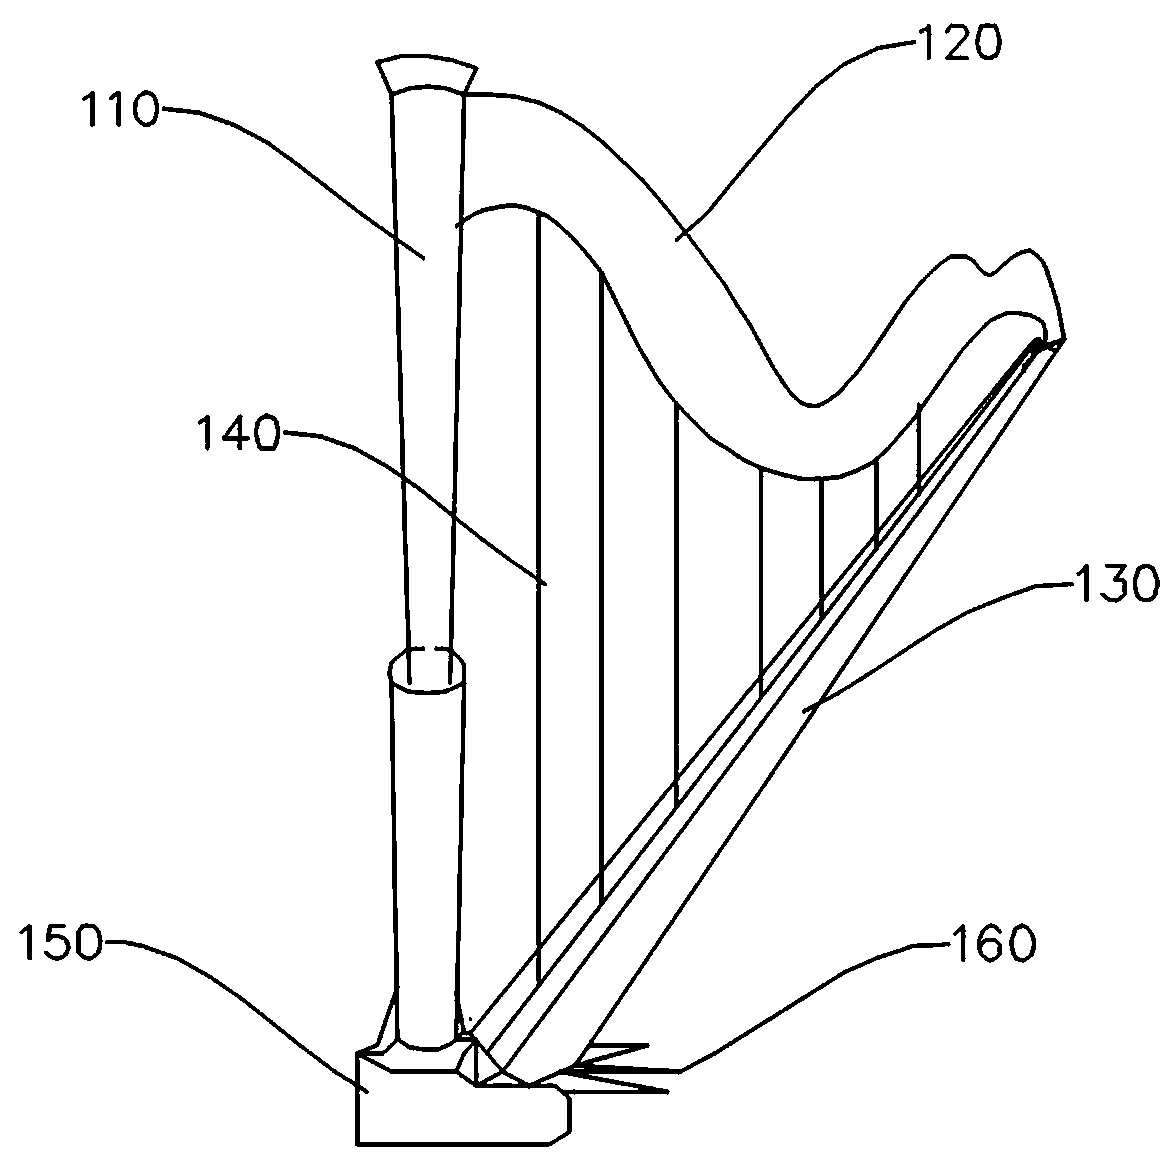 High-pitch harp